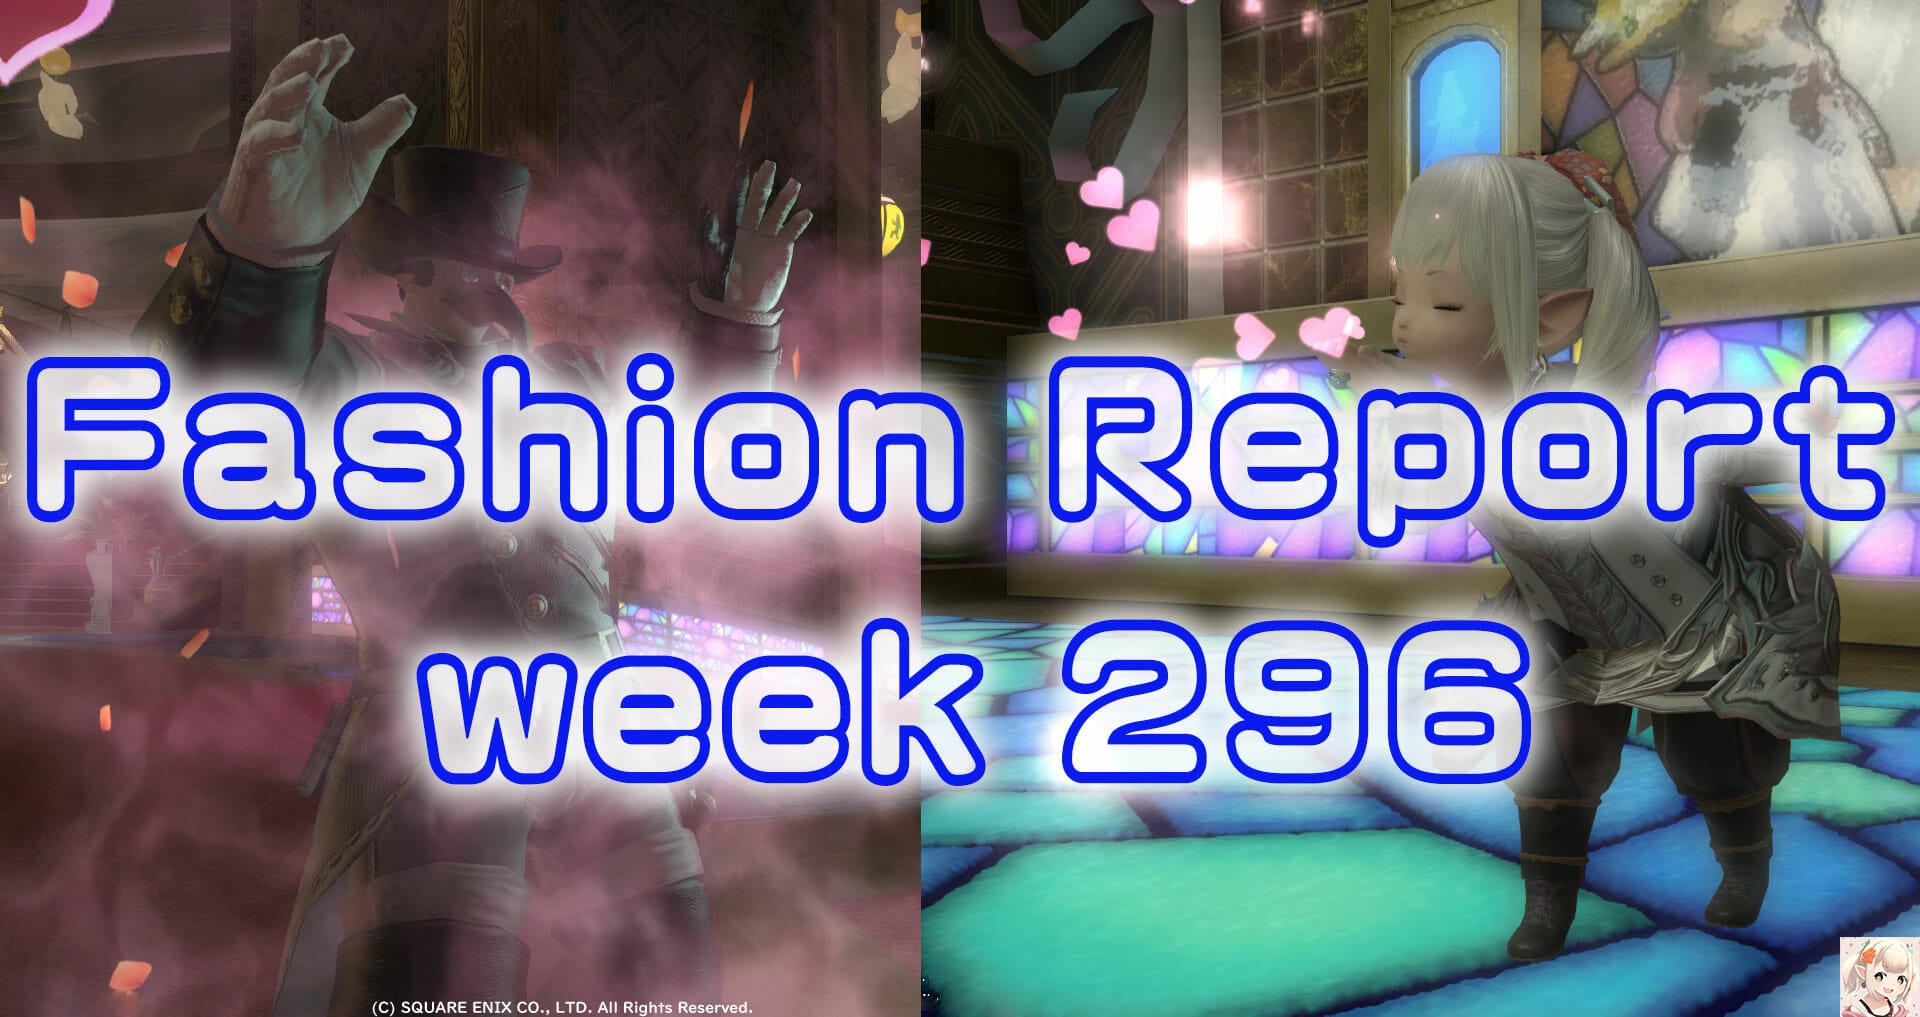 Fashion Report week 296